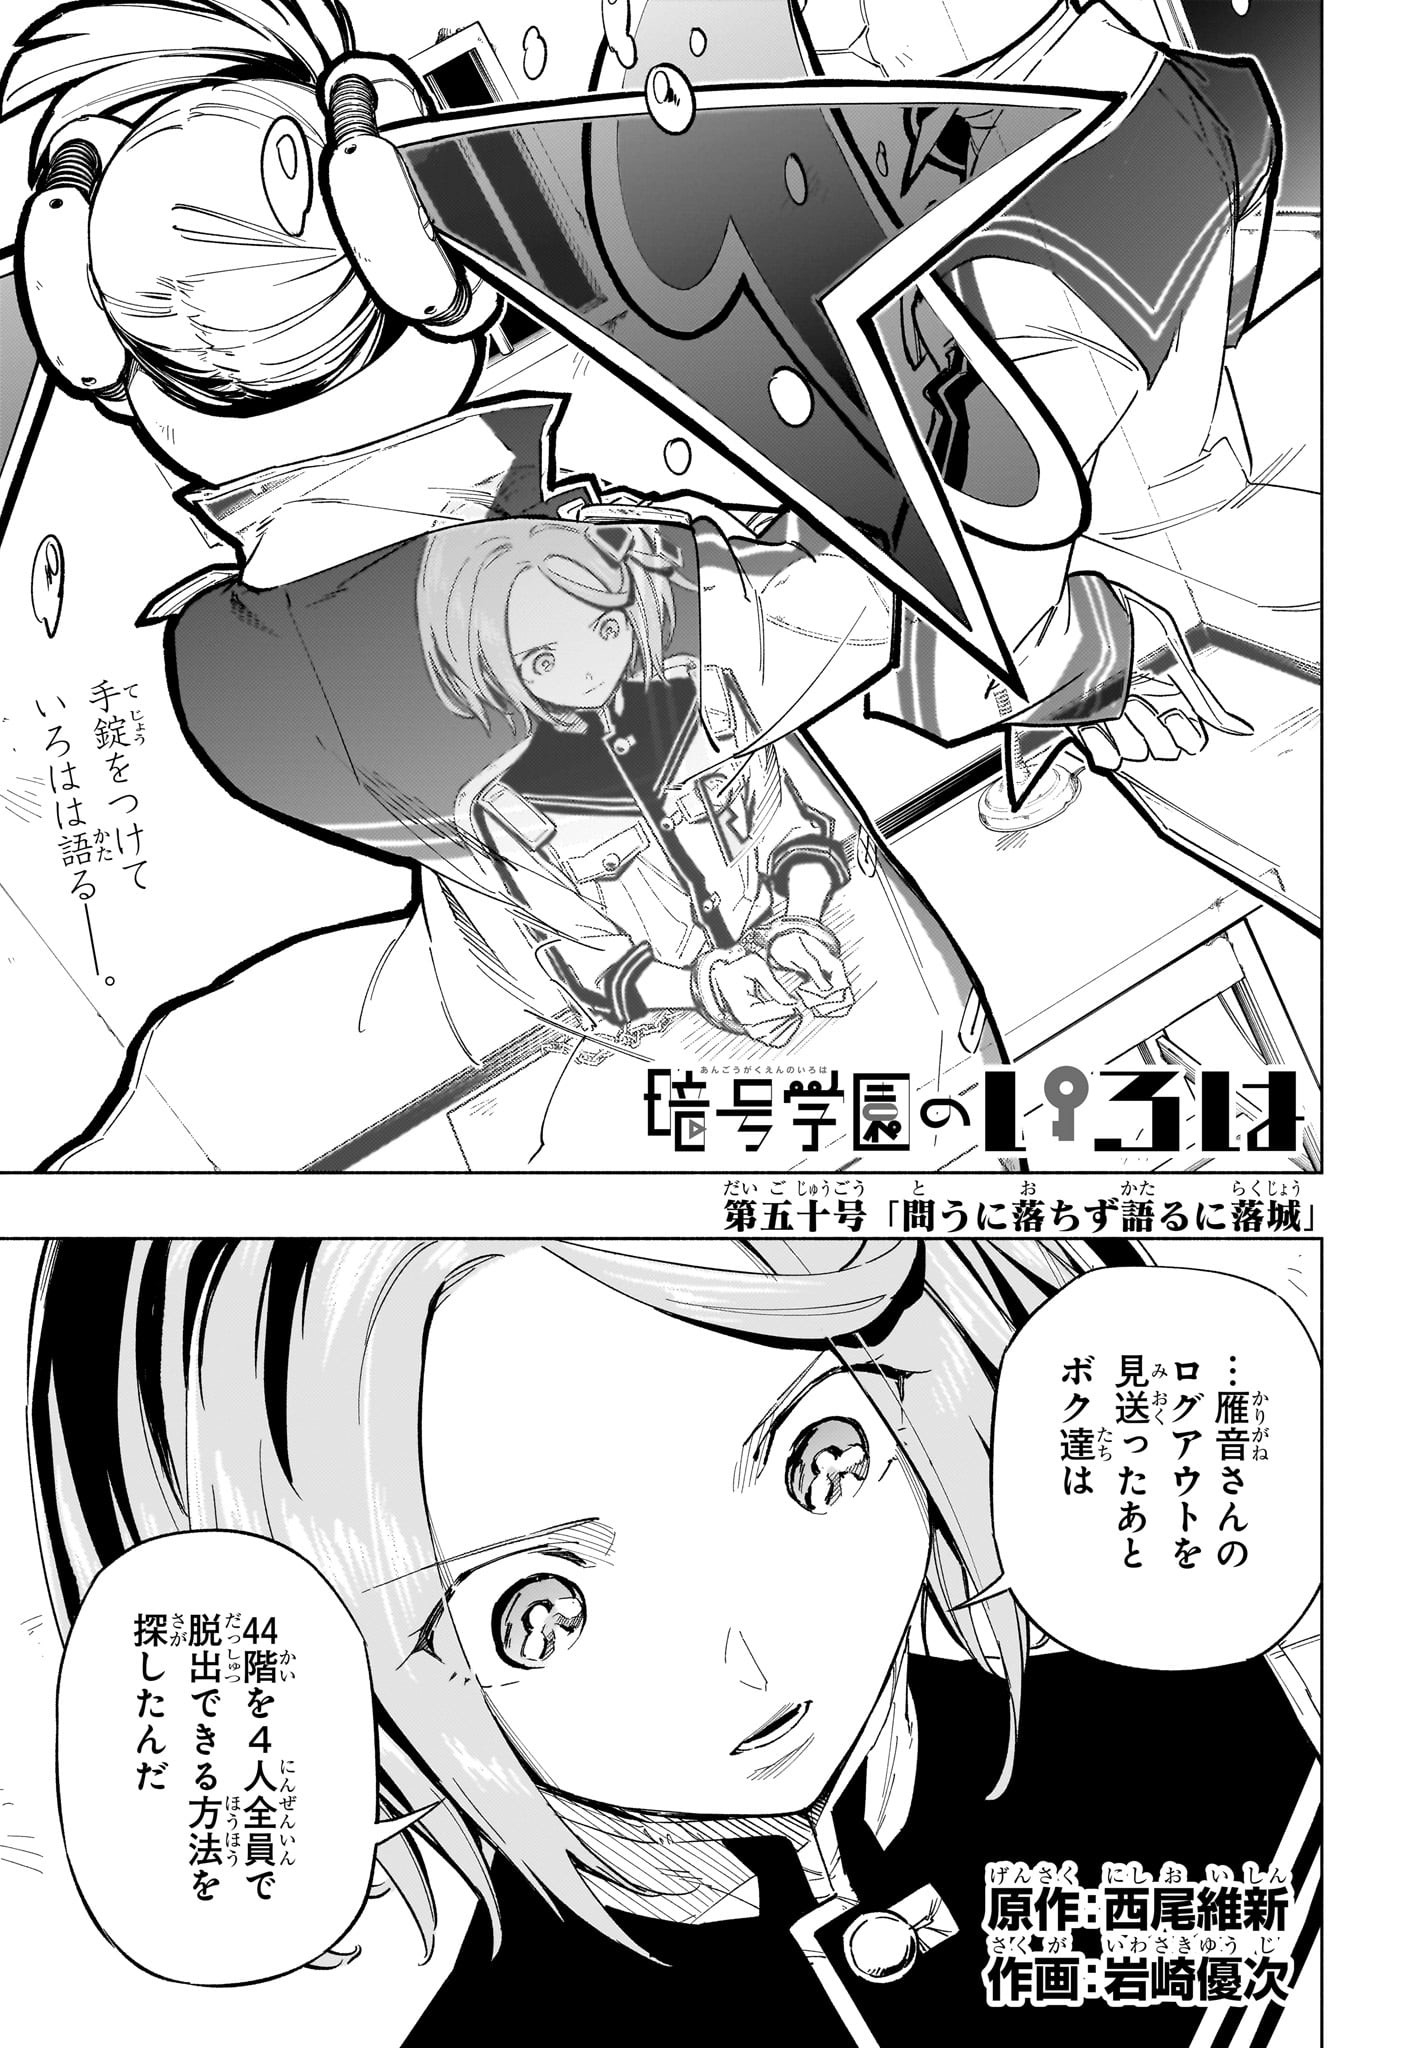 Angou Gakuen no Iroha - Chapter 50 - Page 1